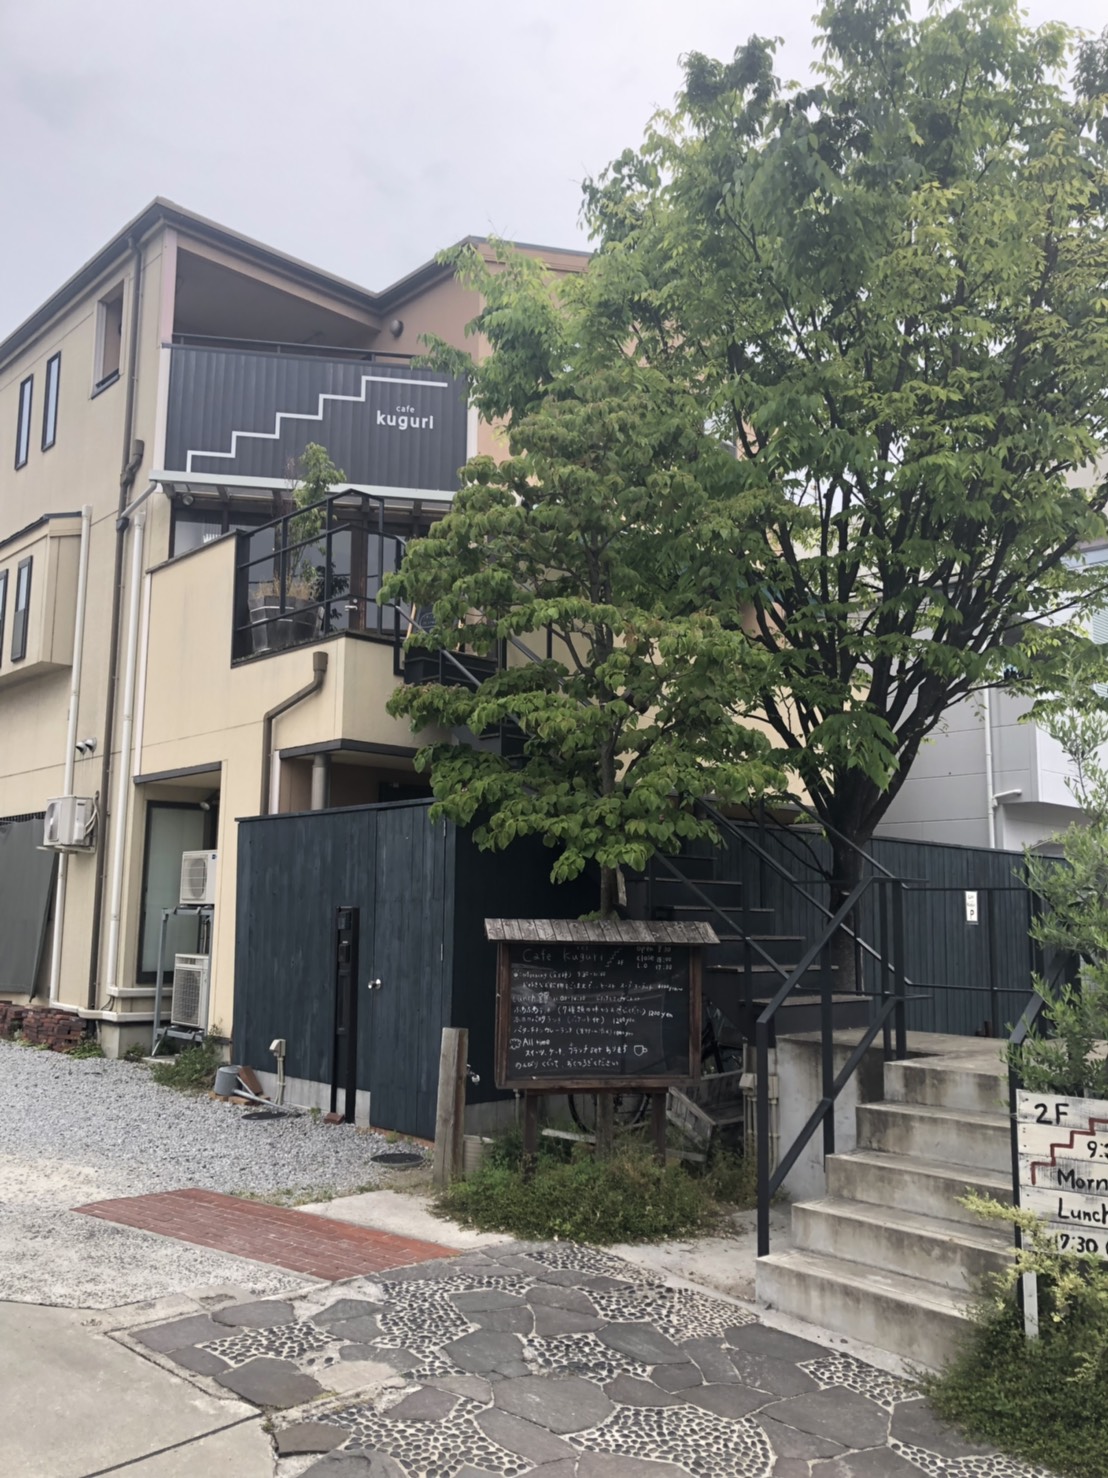 2019/5/14 　cafe kuguri　Googleストリートビュー屋内版撮影